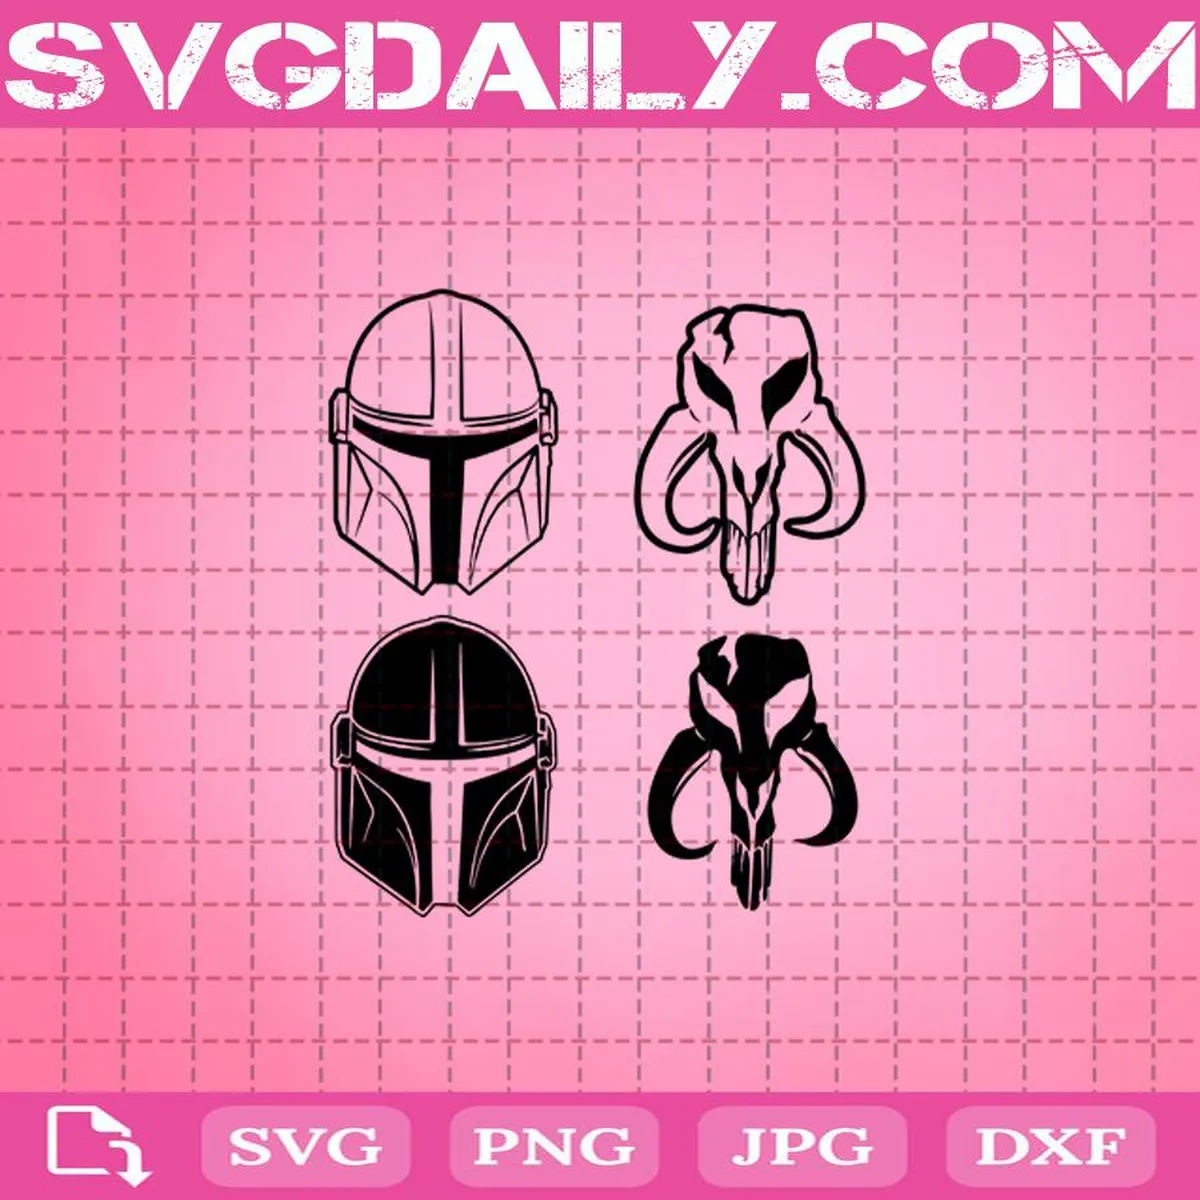 Star Wars Mandalorian Svg Bundle, The Mandalorian Svg, Star Wars Svg, Baby Yoda Svg, Mandalorian Svg, Digital Cut File